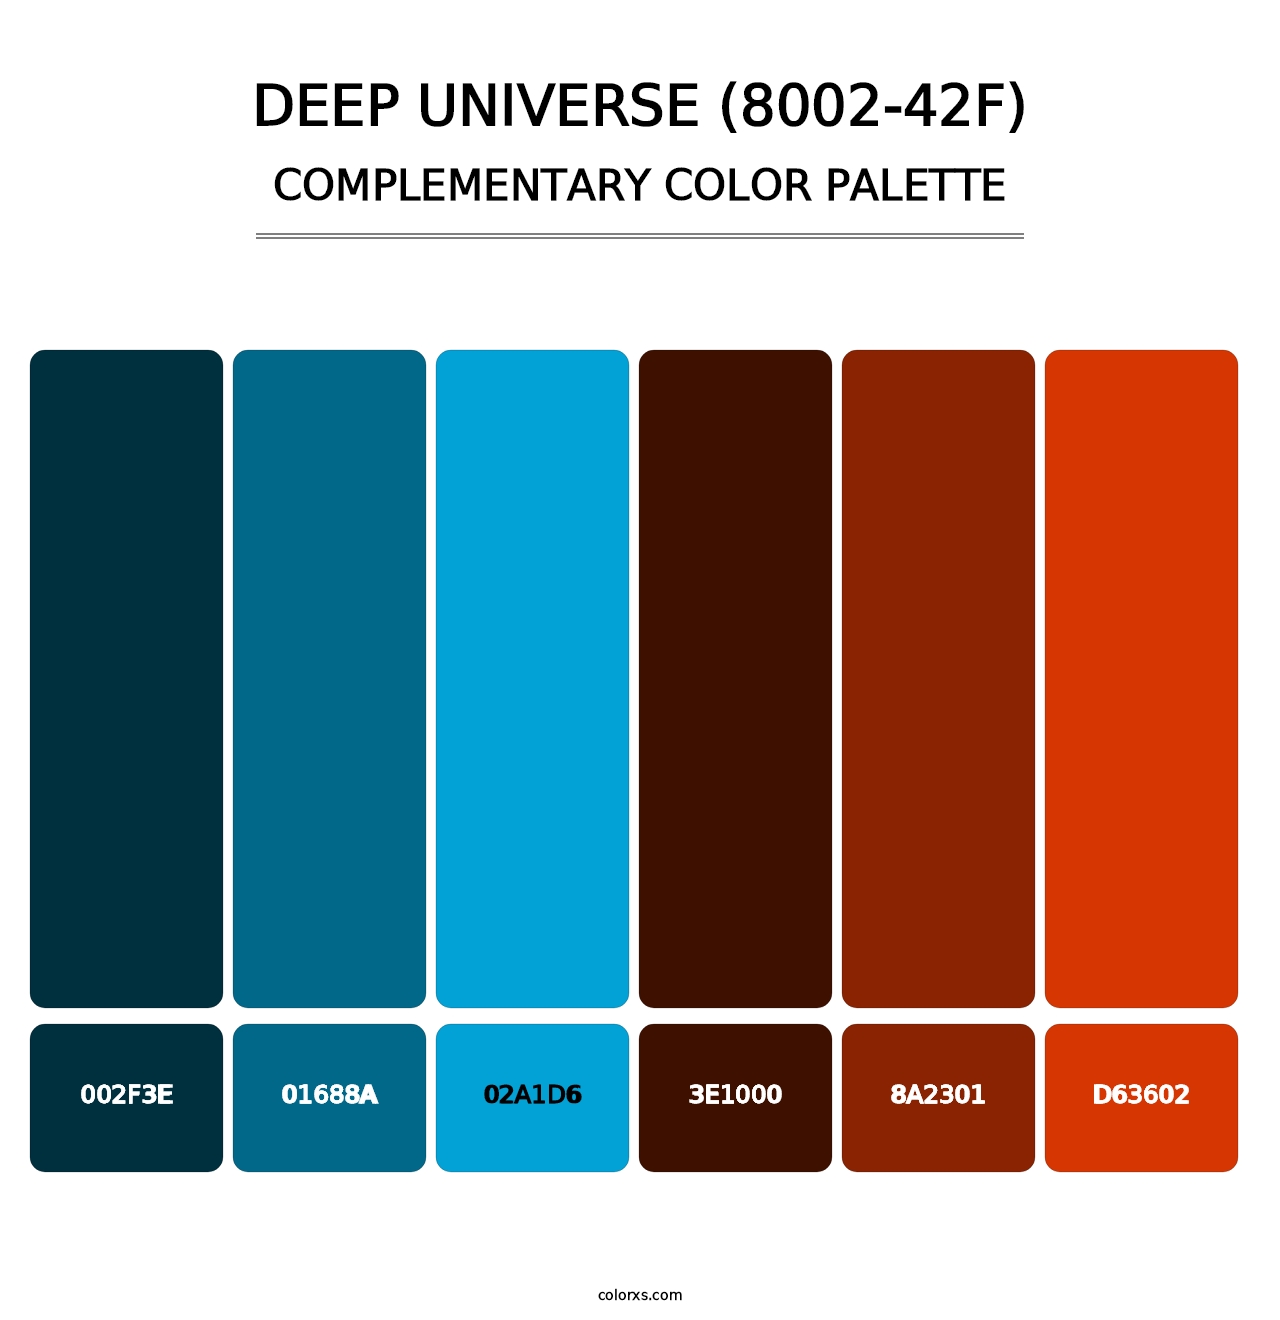 Deep Universe (8002-42F) - Complementary Color Palette